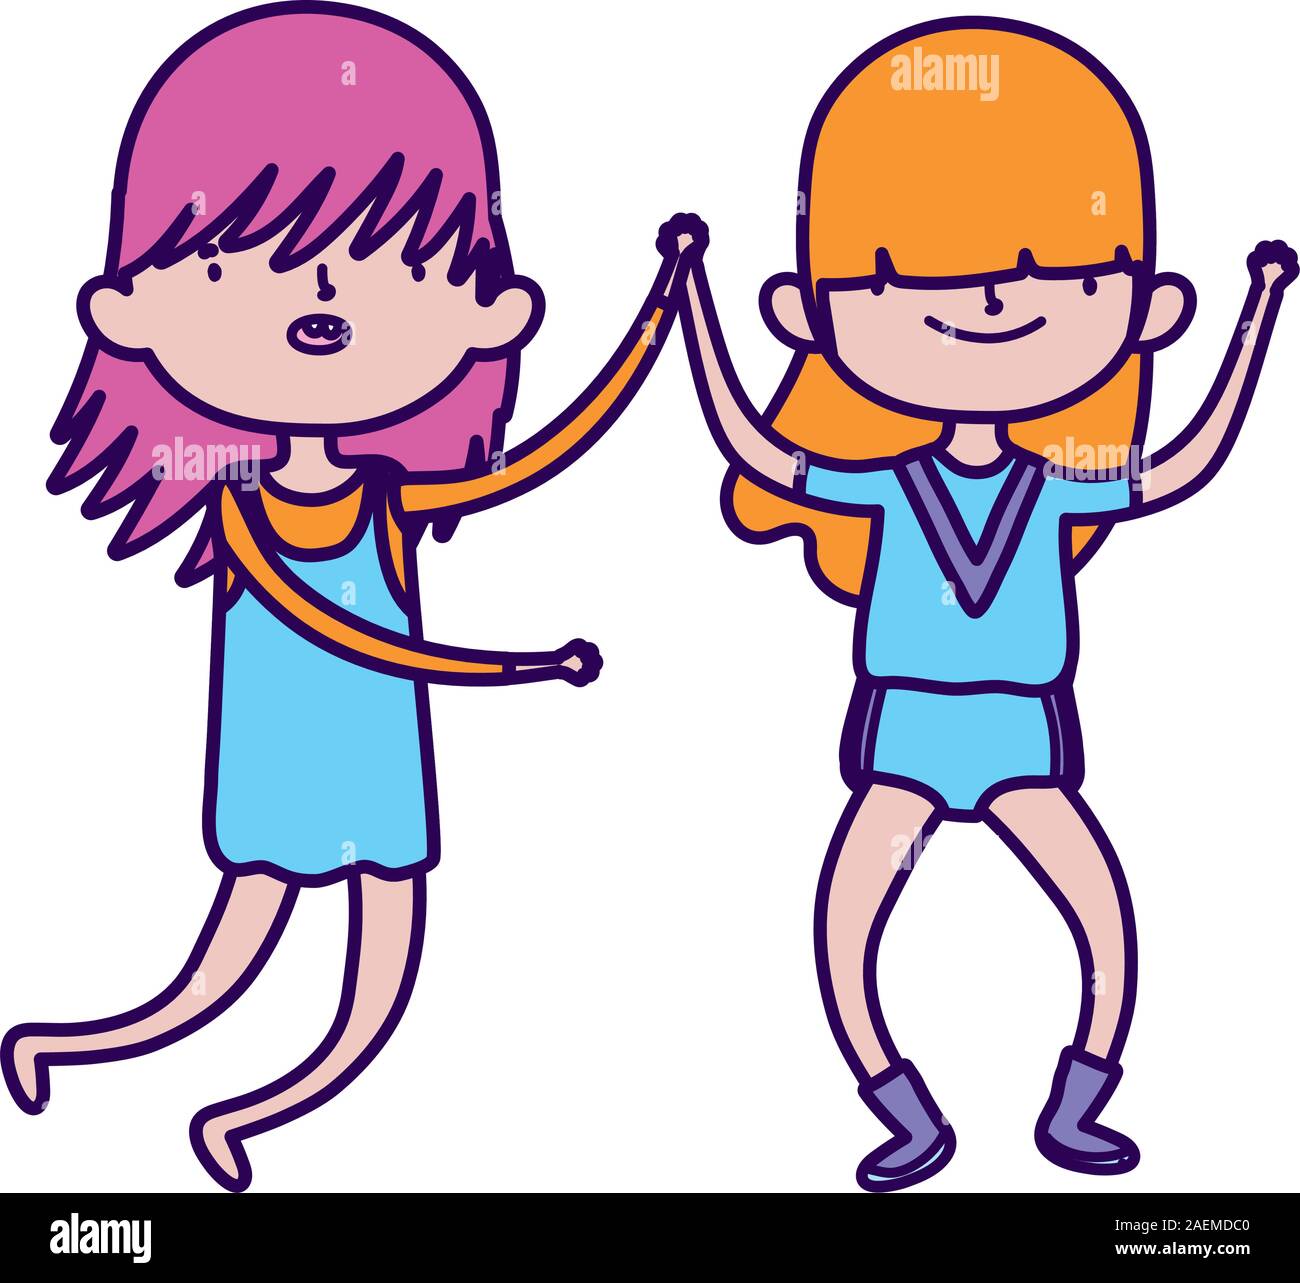 Gruppe Kleine Mädchen Freunde Cartoon Character Vector Illustration Stock Vektorgrafik Alamy 